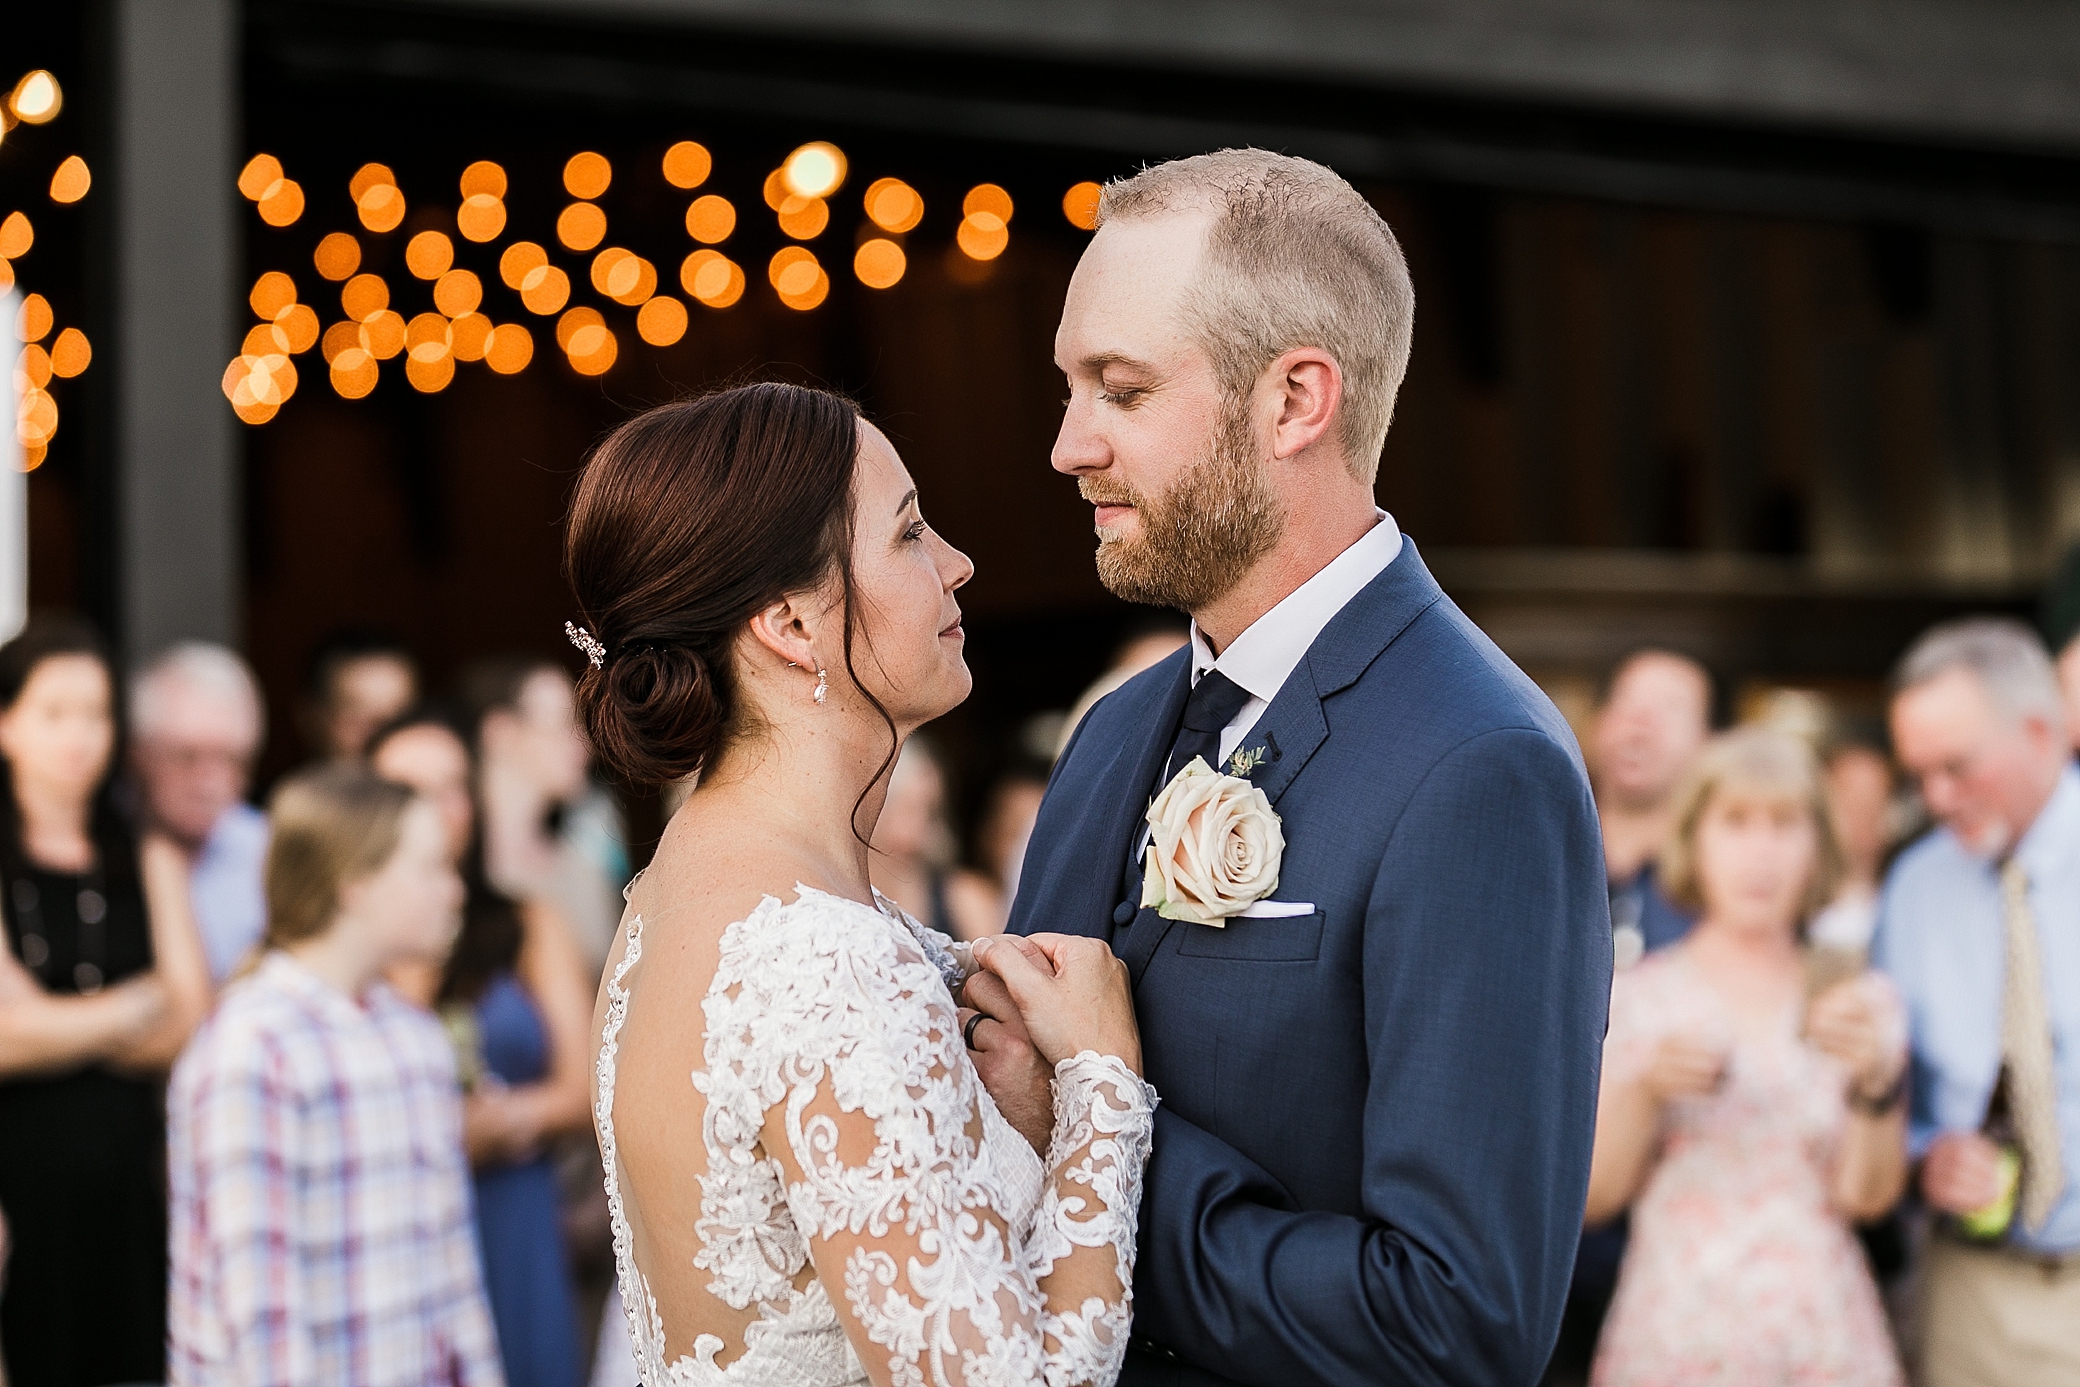 Bride and groom first dance on the MV Skansonia | Megan Montalvo Photography 